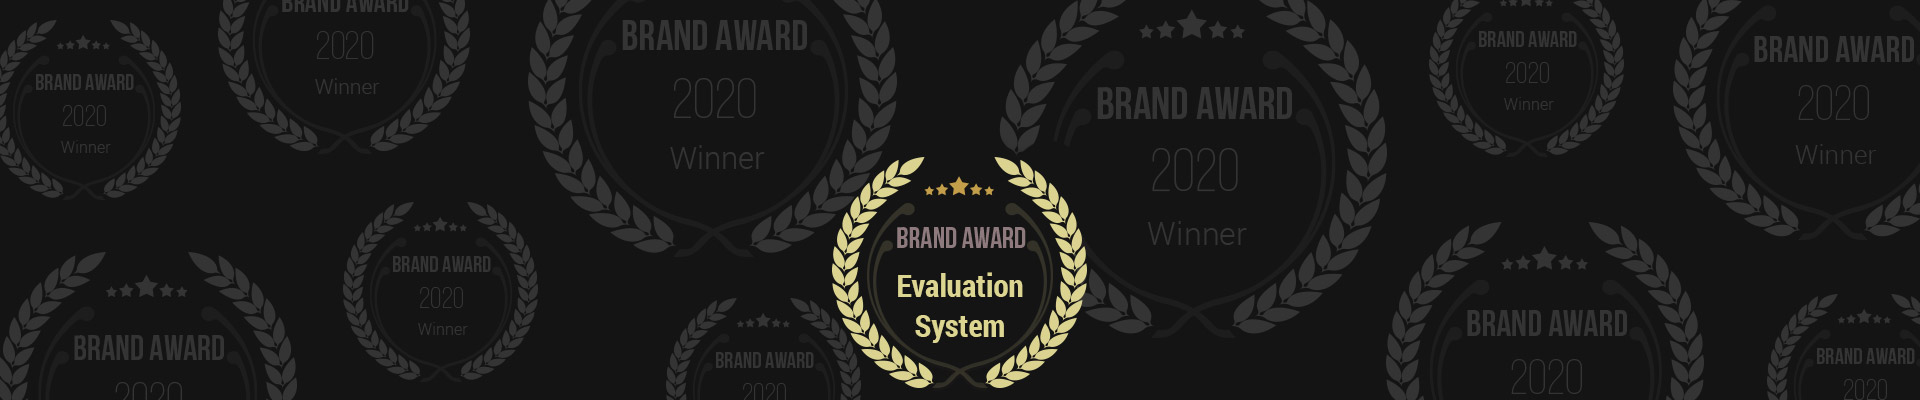 Evaluation System